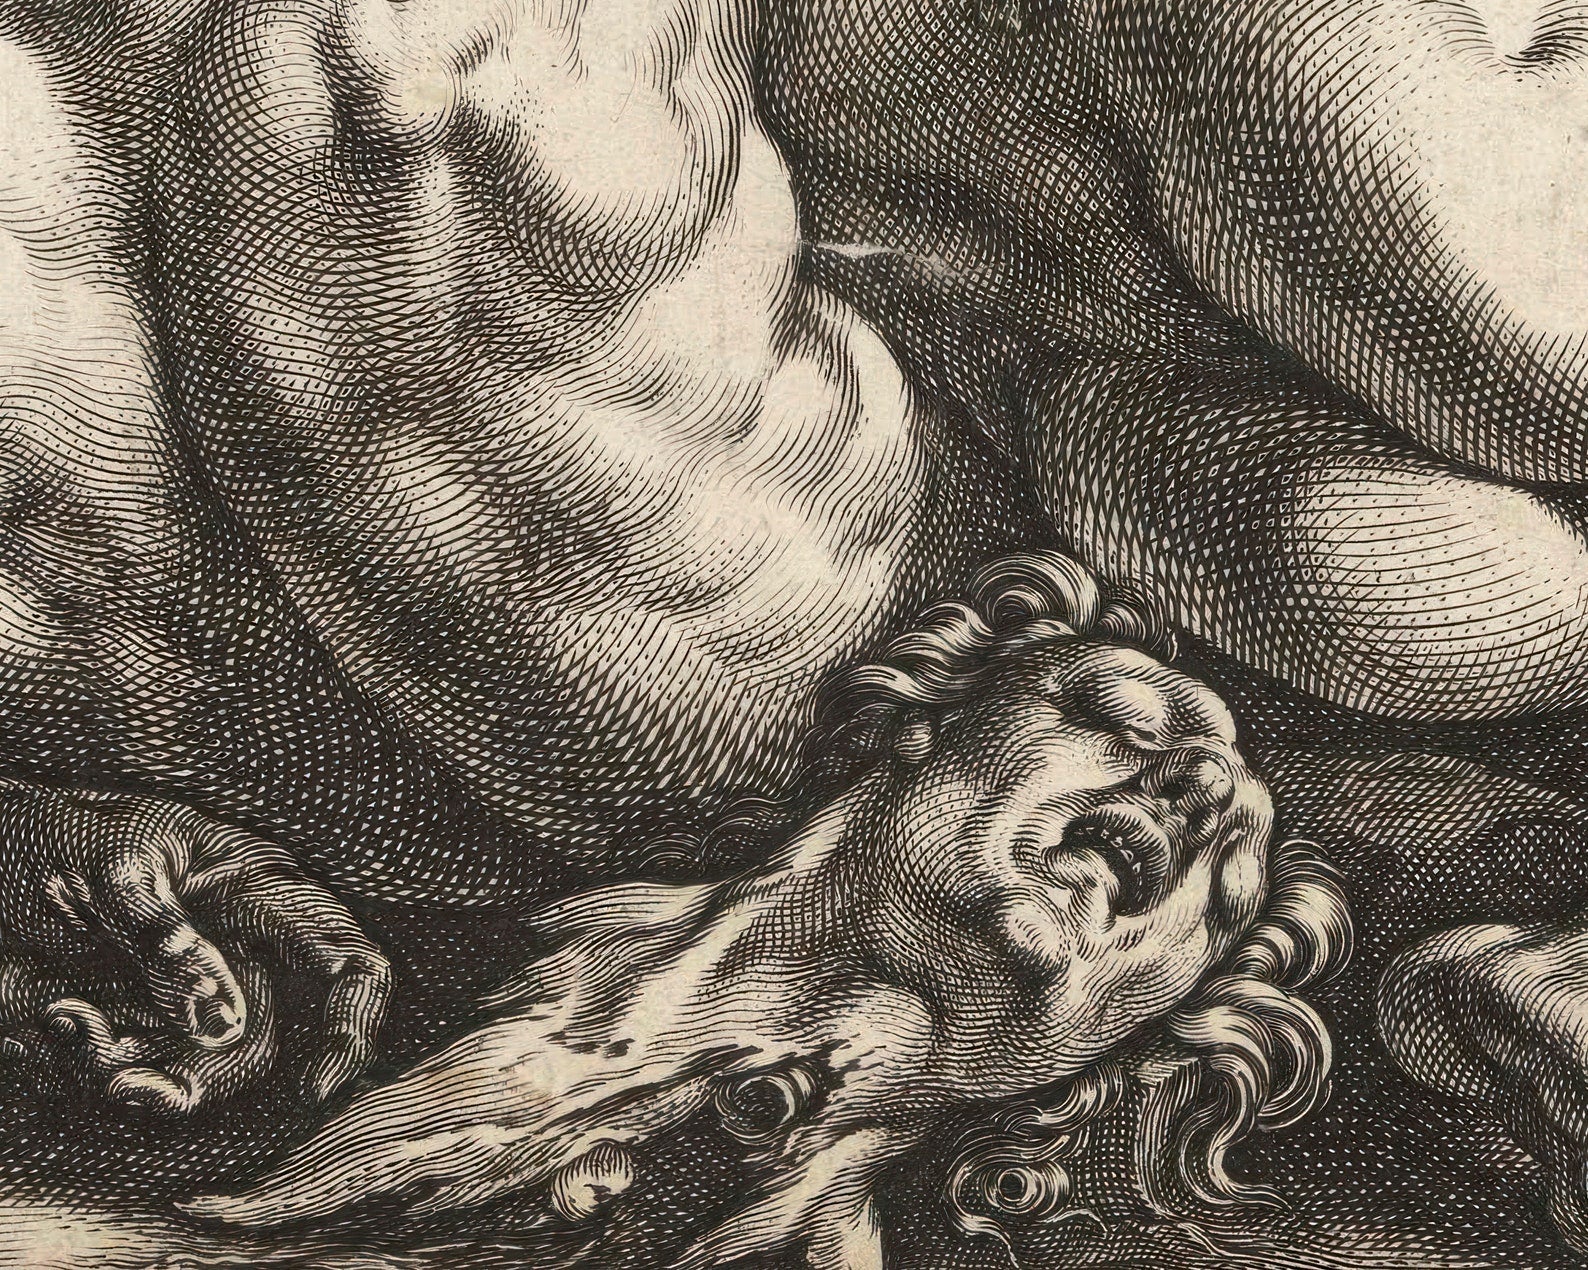 Hendrick Goltzius "The Dragon Devouring the Companions of Cadmus" (c.1588) - Mabon Gallery